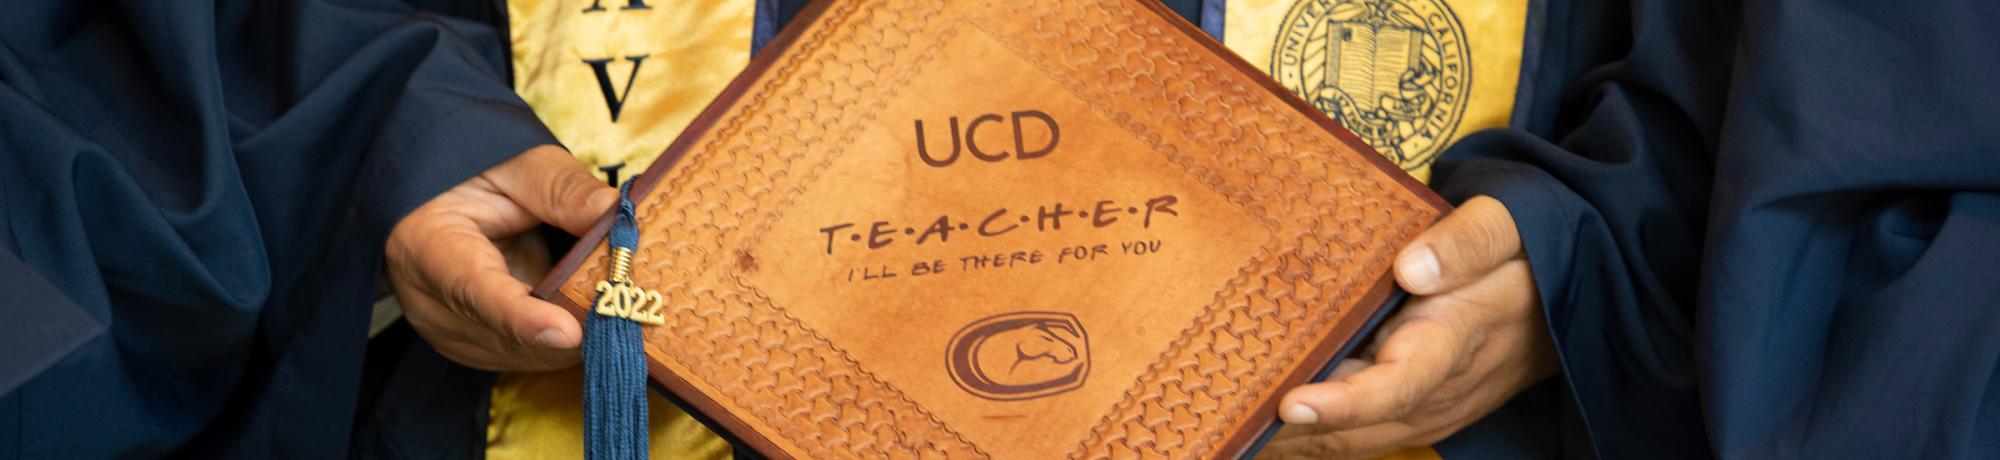 Close up of mortar board with UC Davis Teacher written on it.